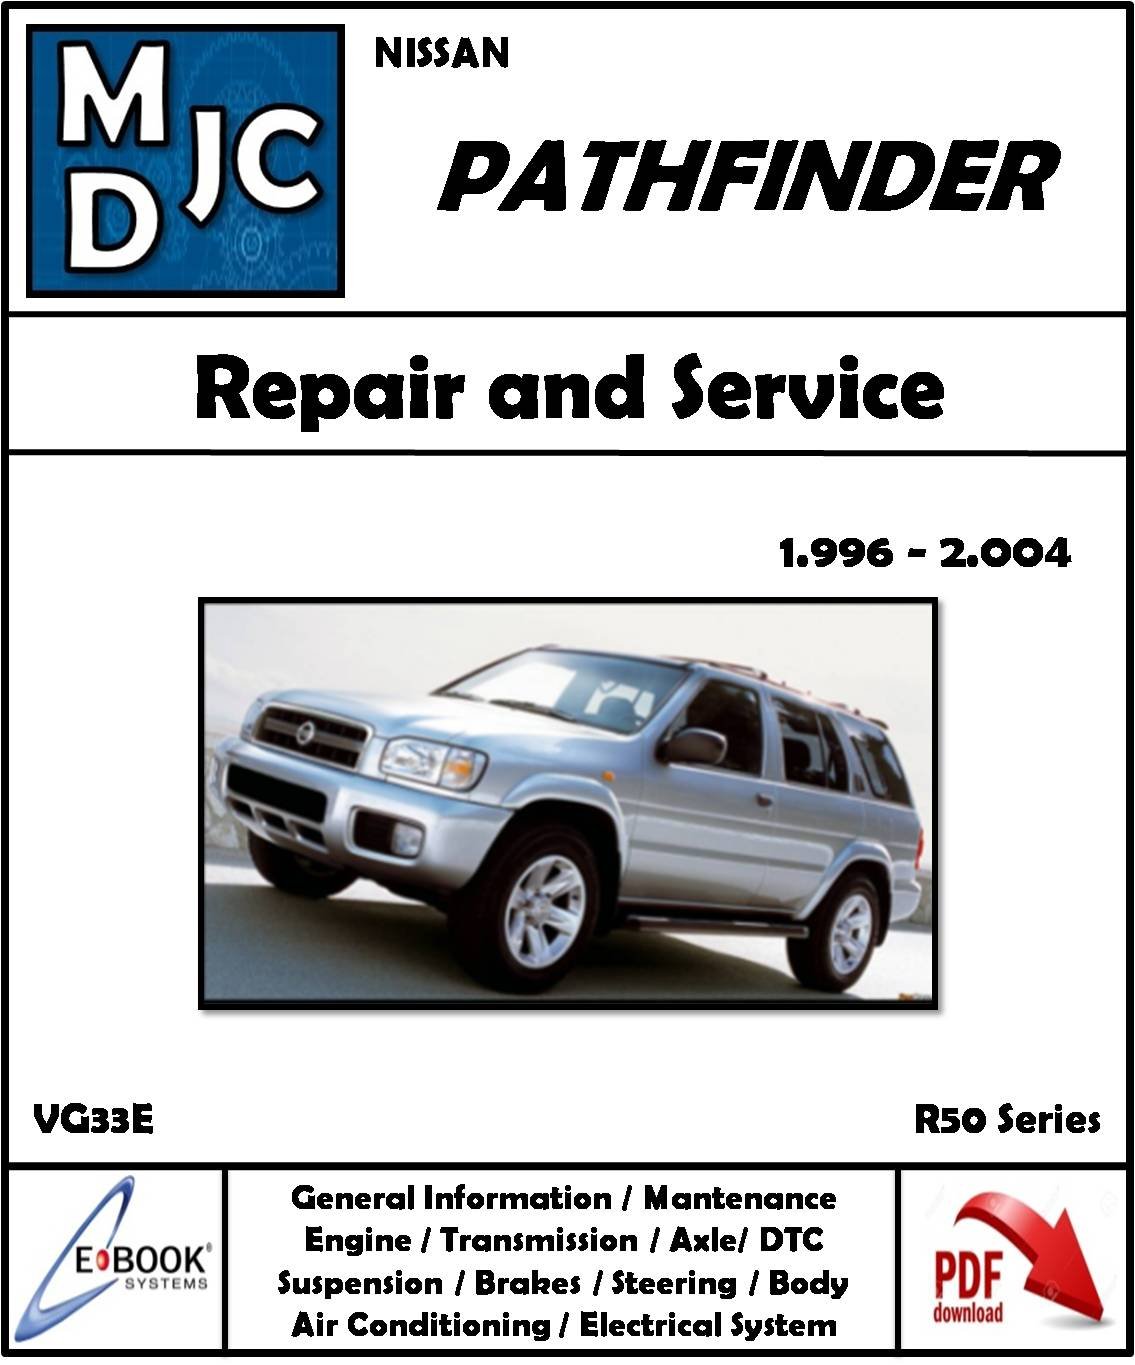 Nissan Pathfinder R50 Series 1996 - 2004